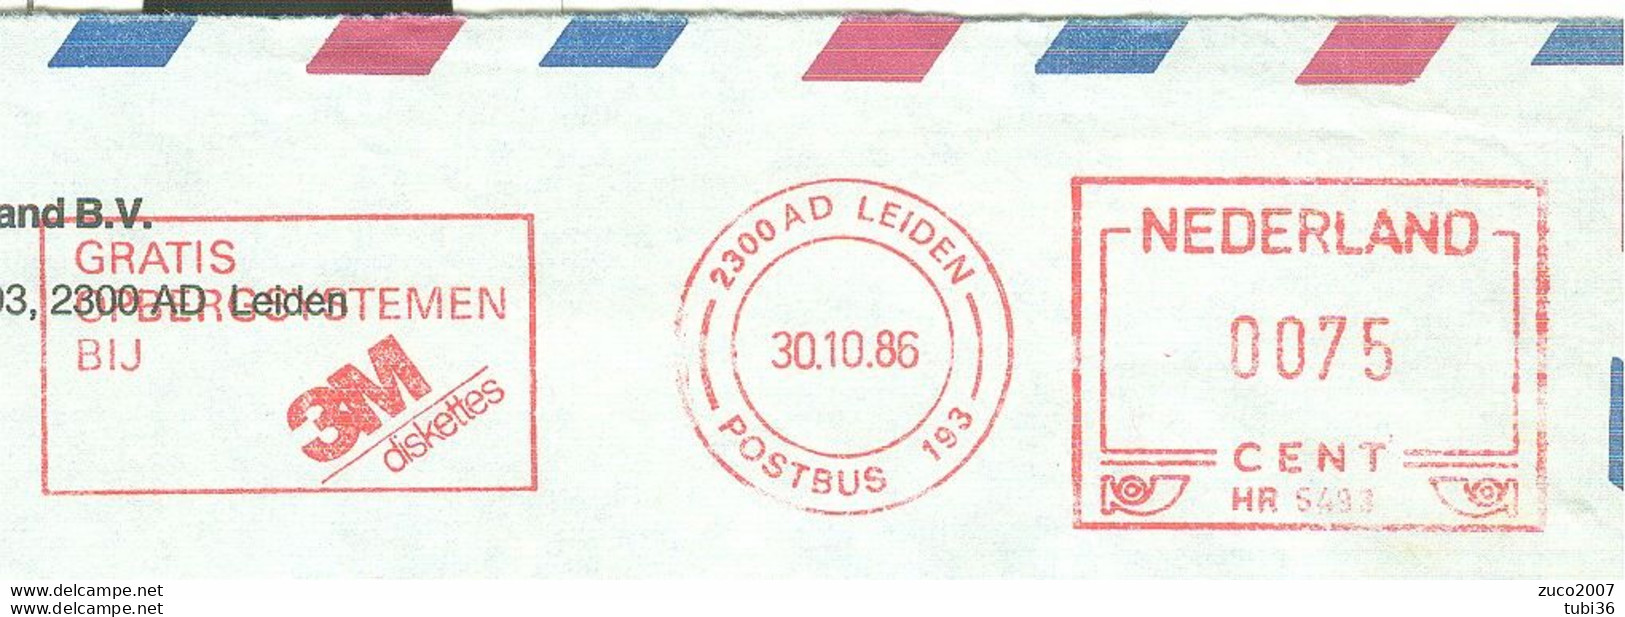 NEDERLAND - LEIDEN - 3M -1986 - FERRARA - ITALIA - Maschinenstempel (EMA)